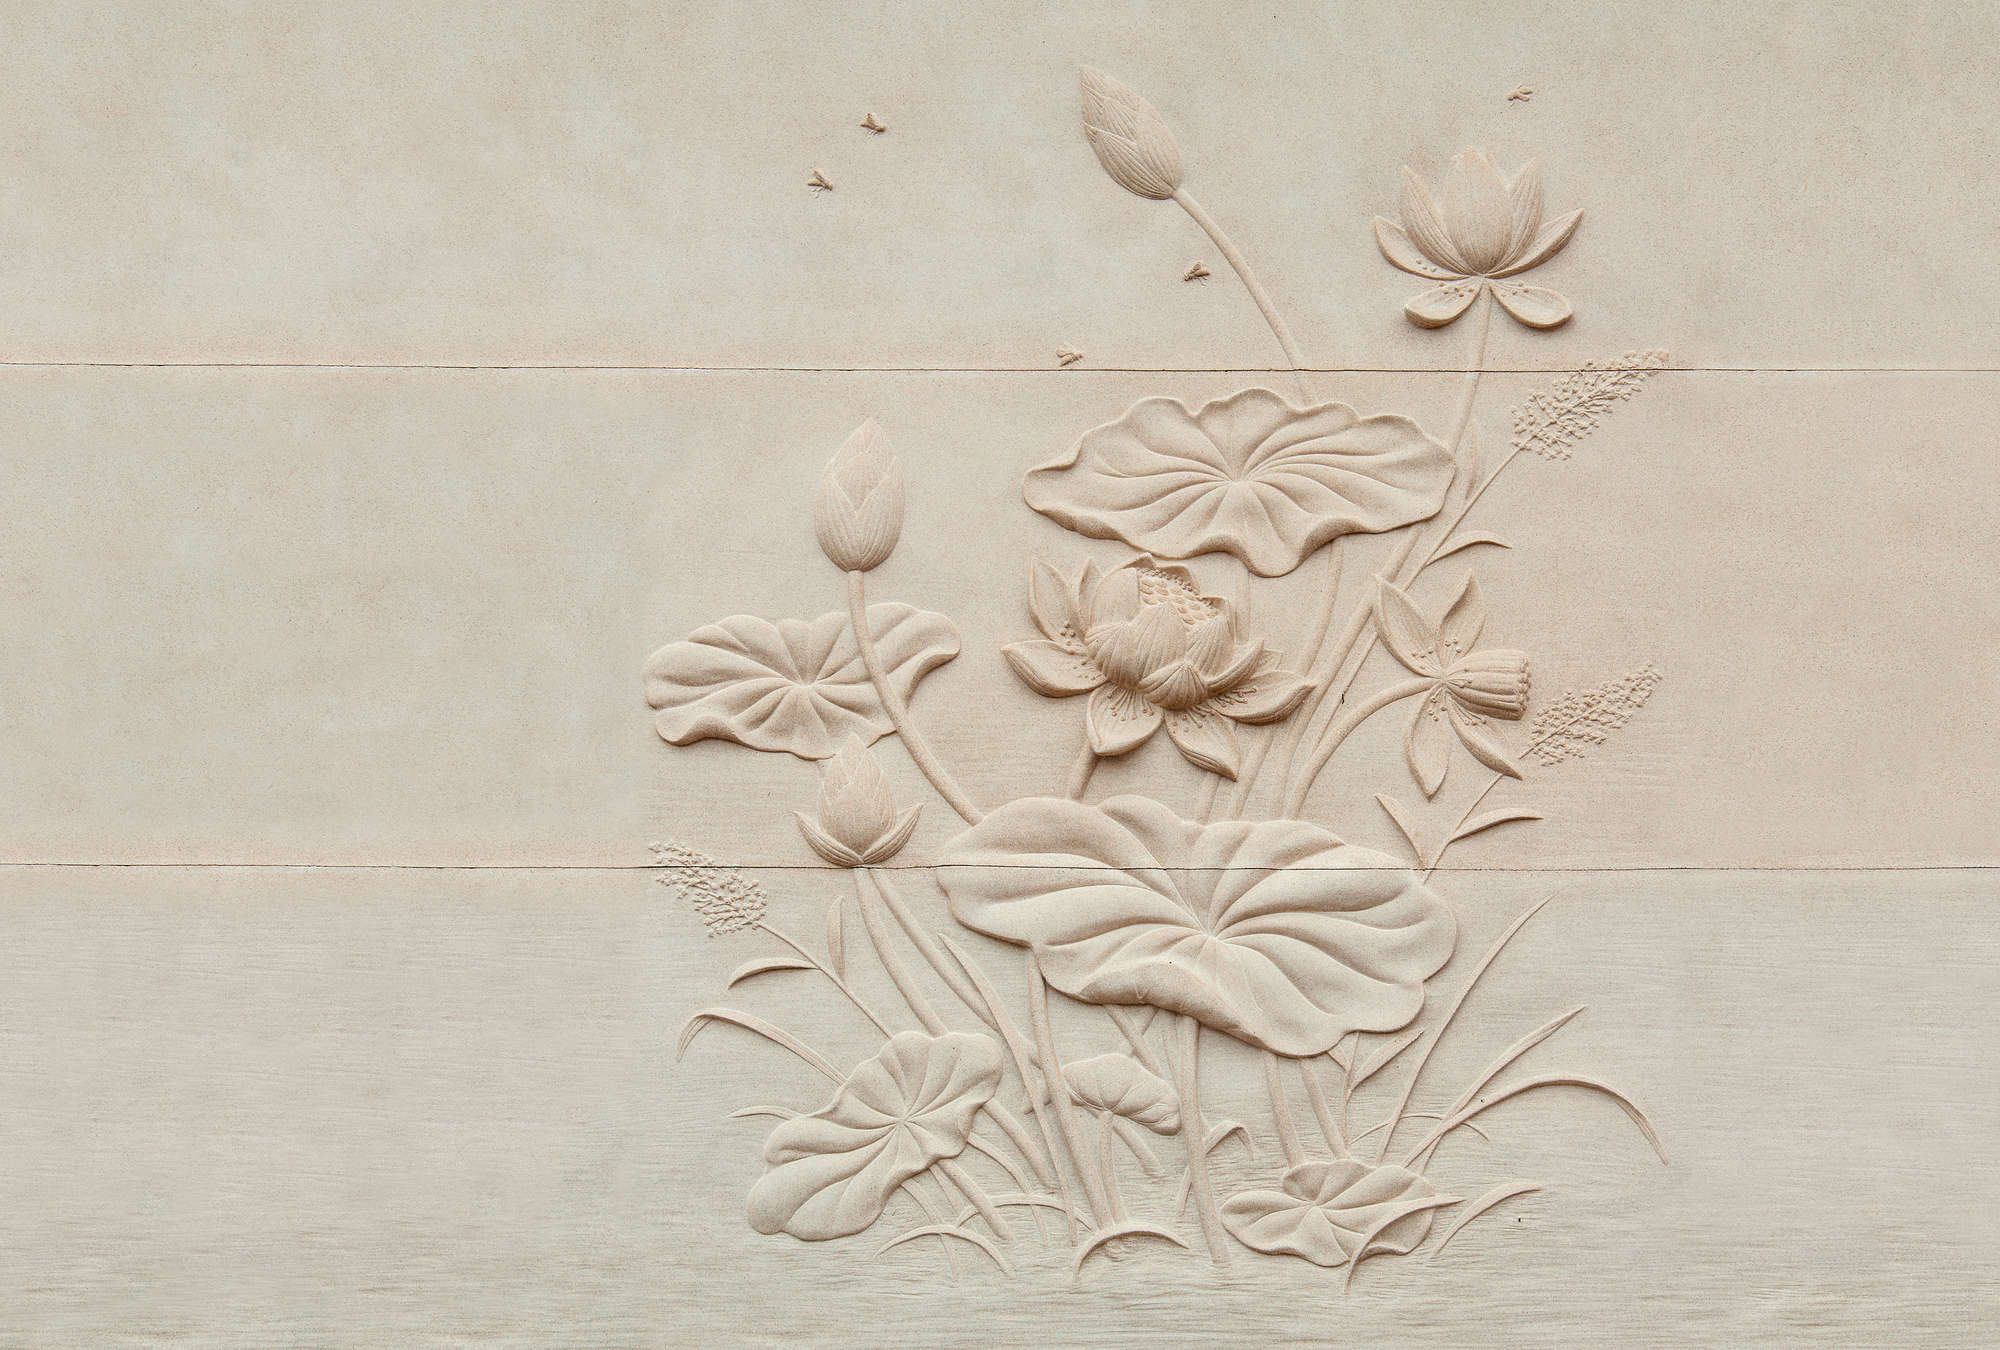             Fotomural »fiore« - Relieve floral sobre estructura de hormigón - Tela no tejida lisa, ligeramente nacarada
        